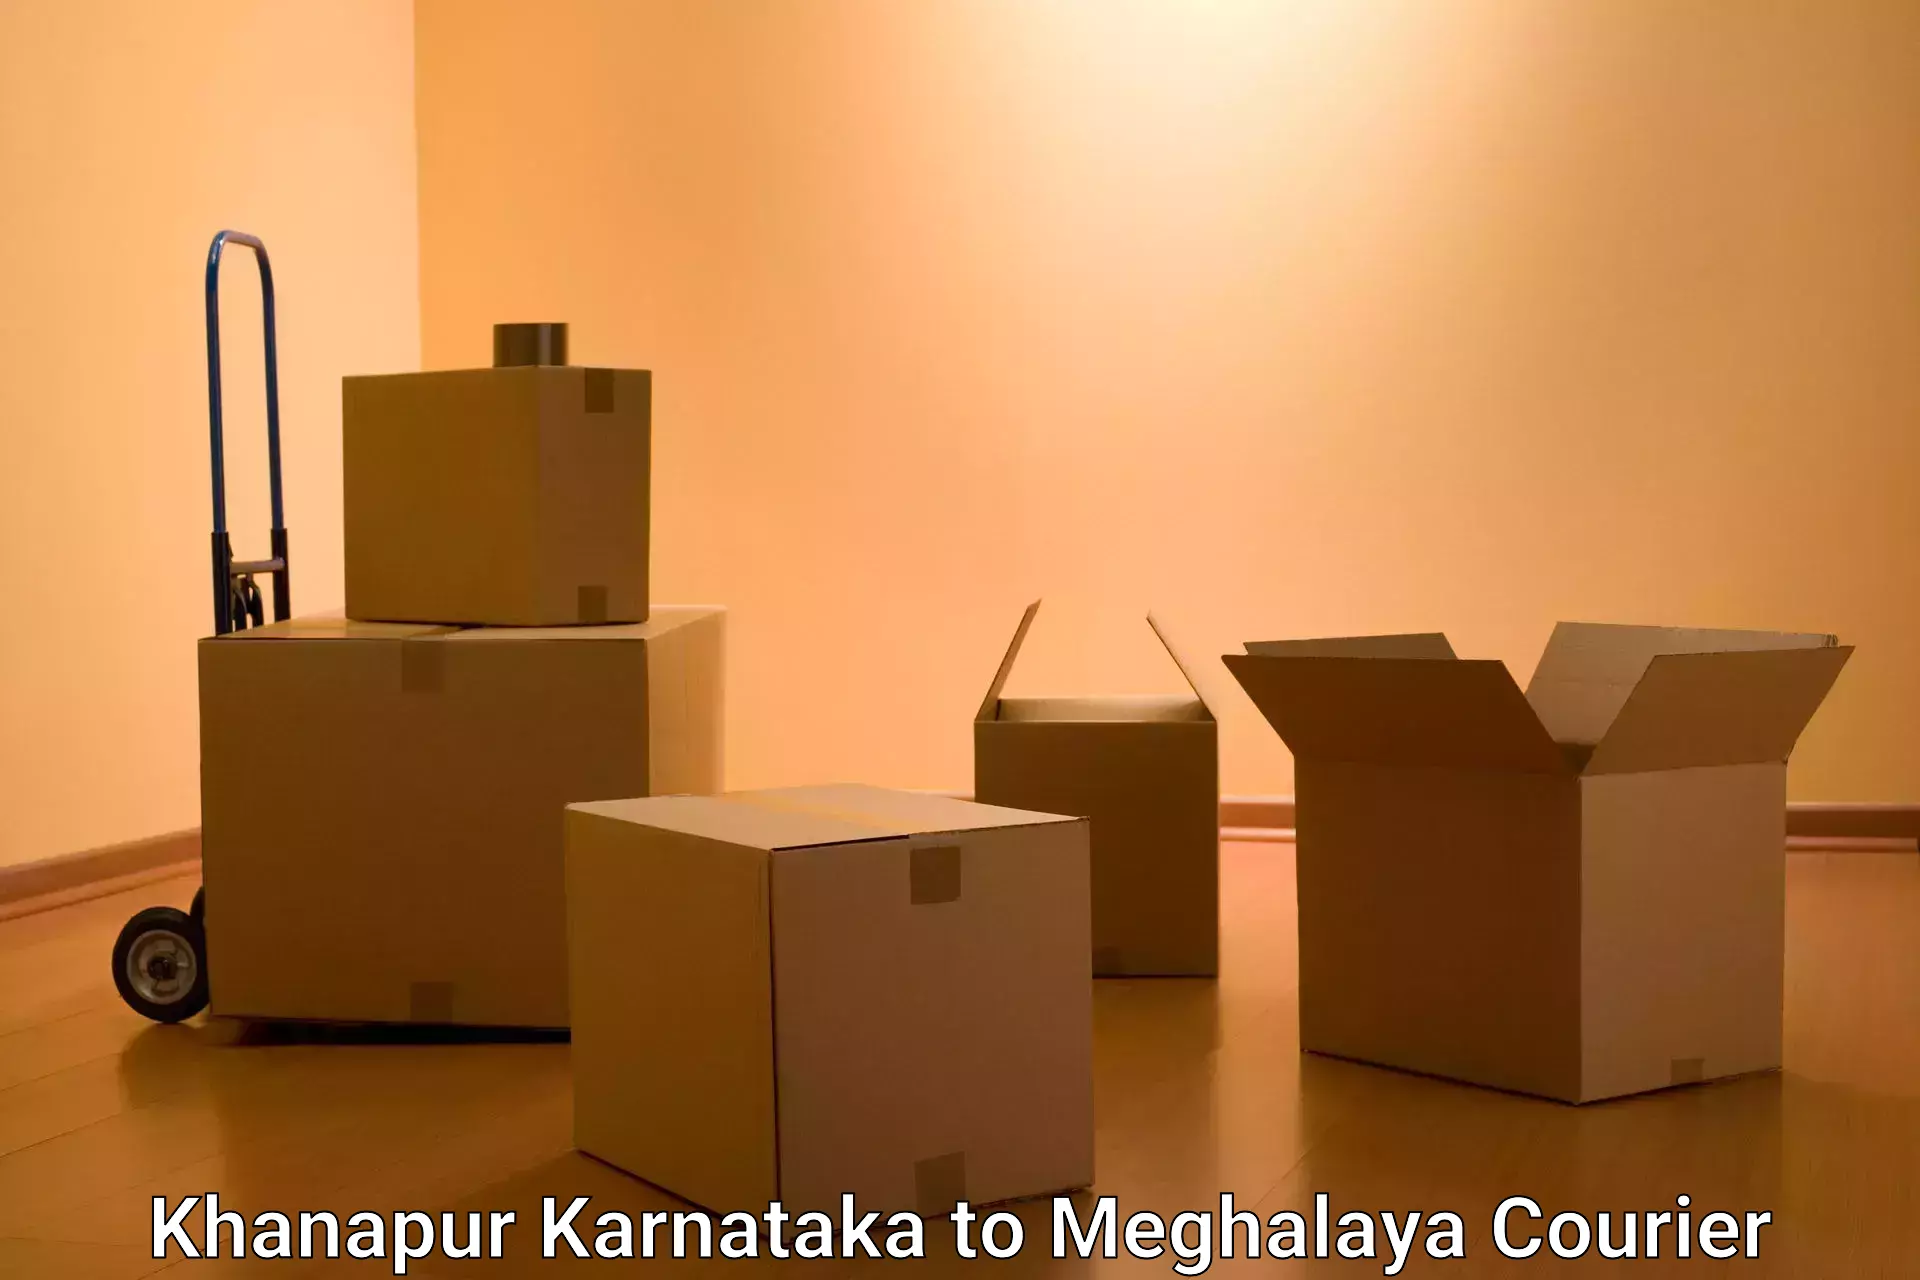 Package delivery network Khanapur Karnataka to Cherrapunji